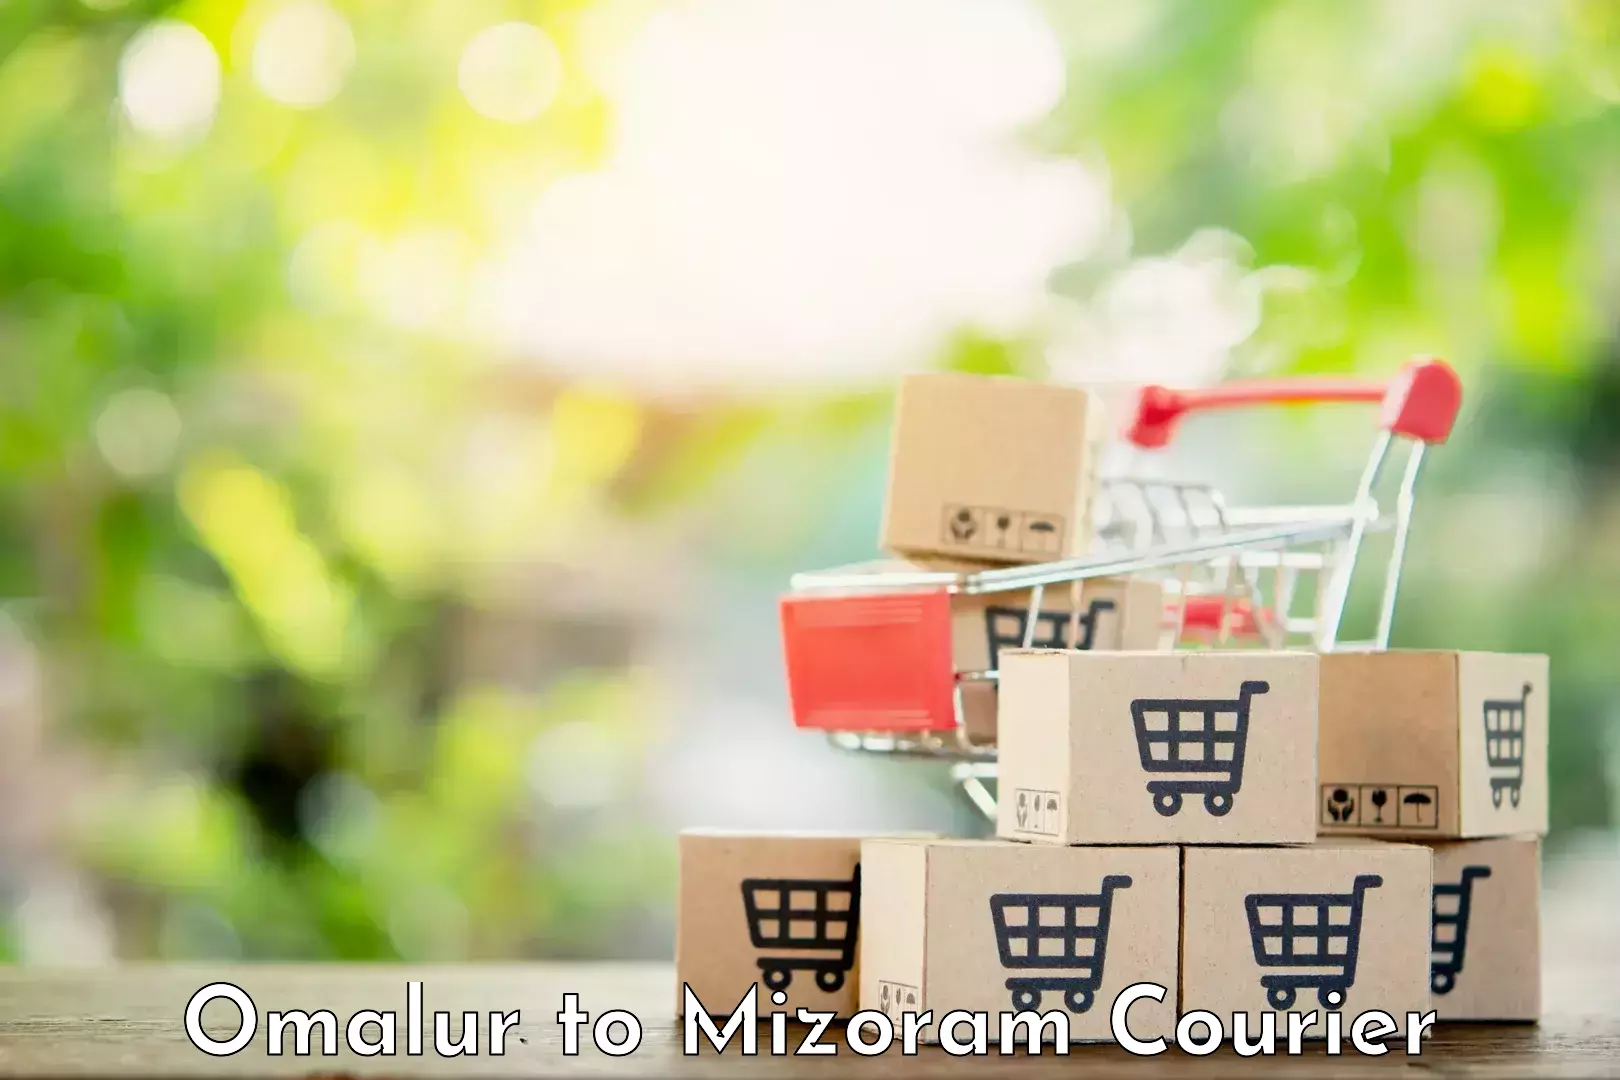 Courier service partnerships Omalur to Mizoram